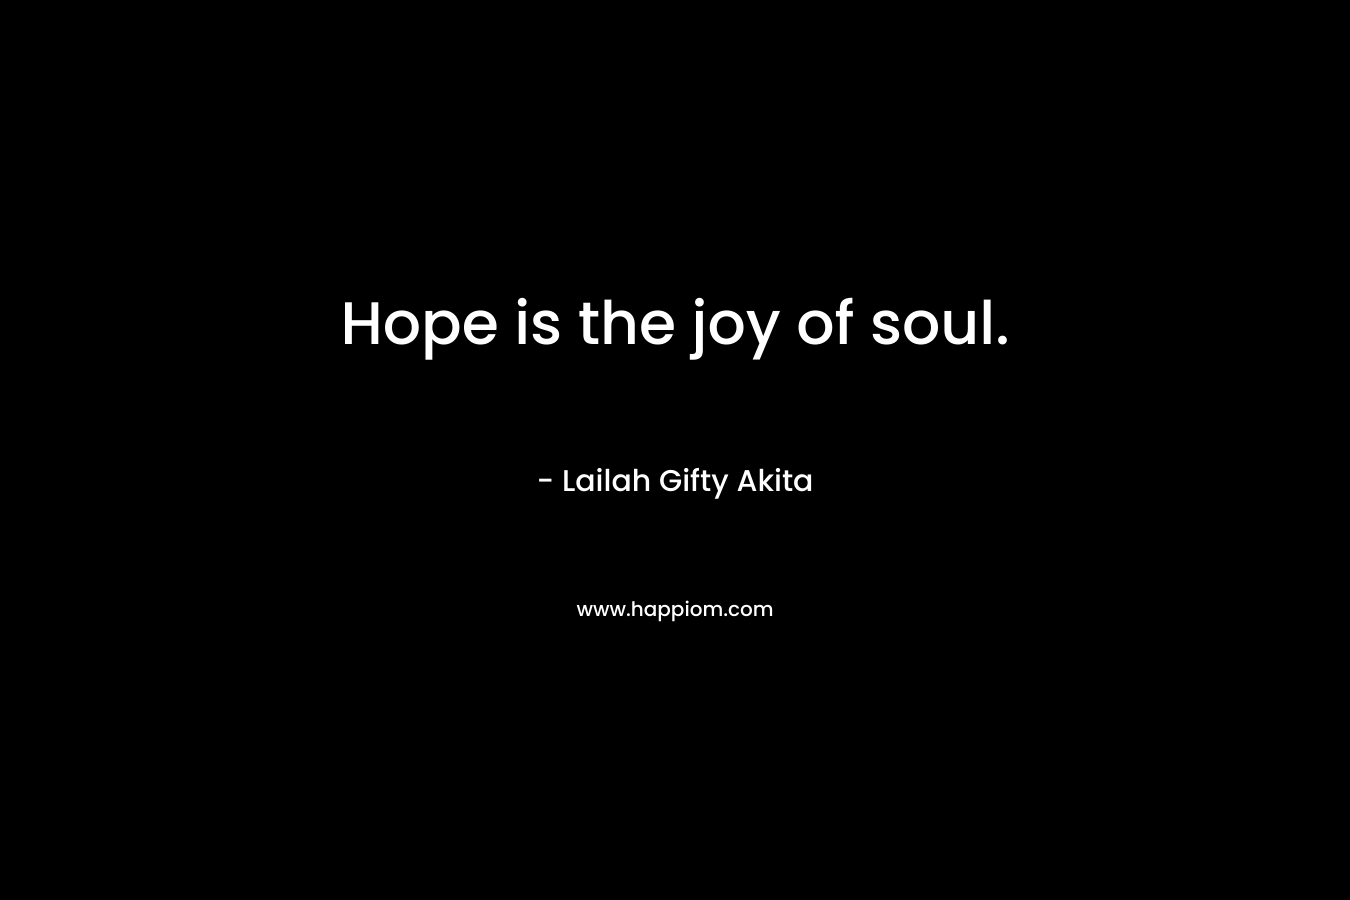 Hope is the joy of soul.